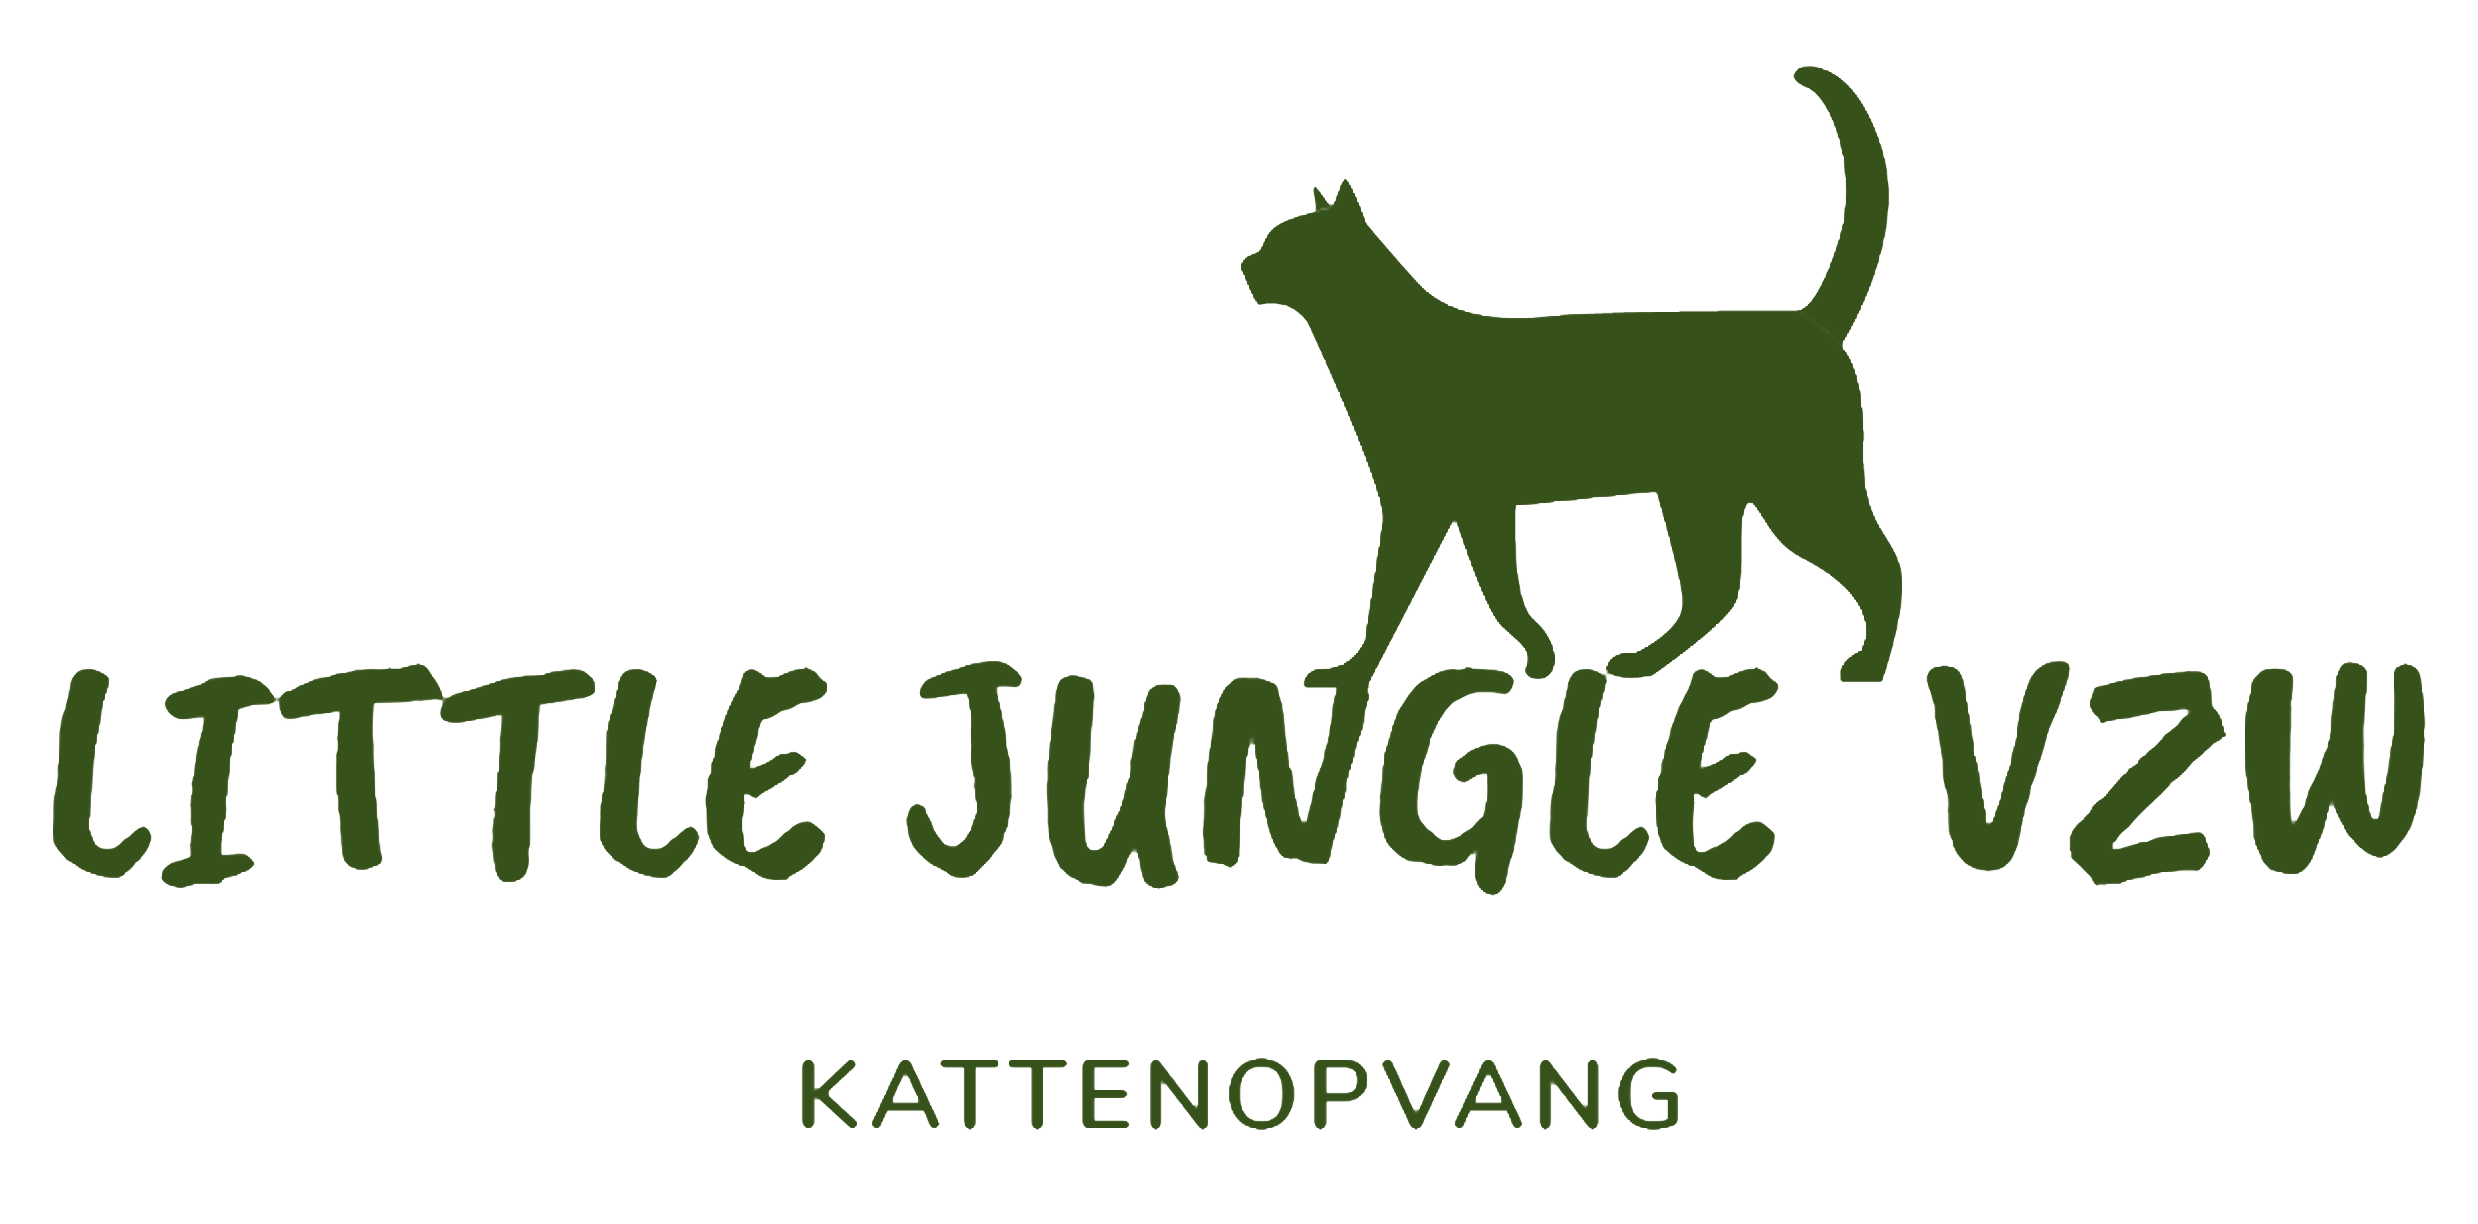 Little Jungle vzw logo